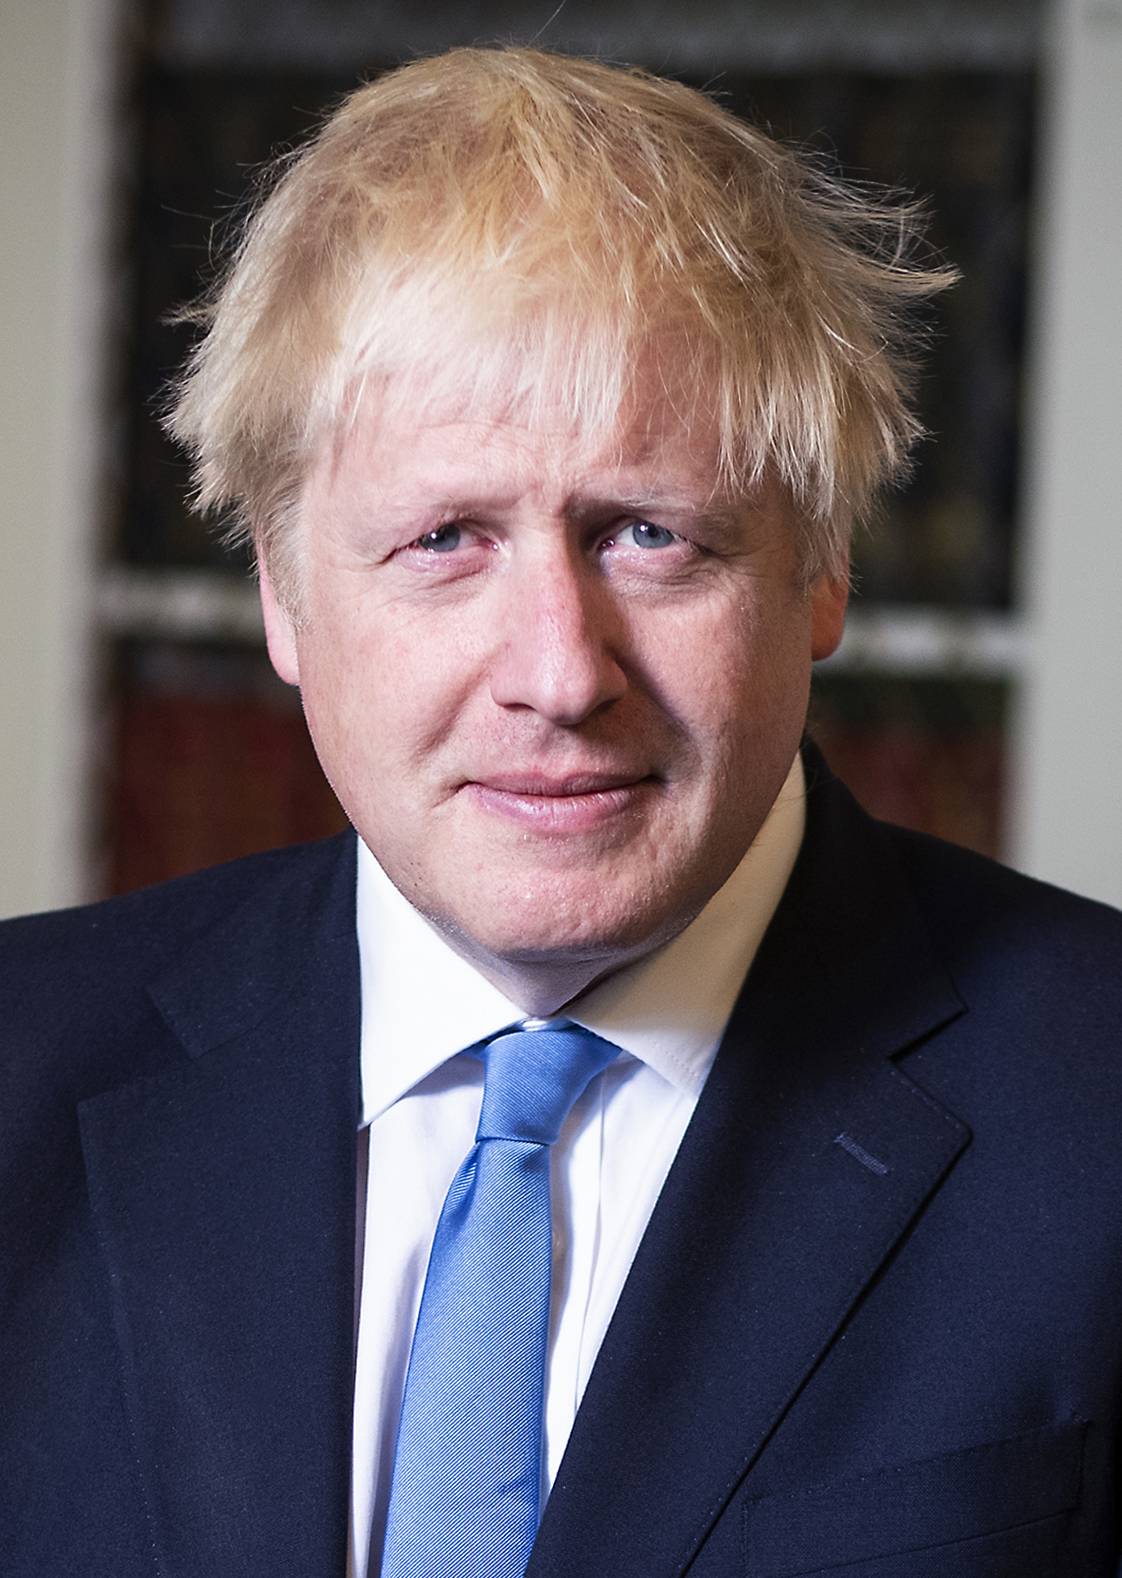 Boris Johnson: भारत की पहली यात्रा पर आज गुजरात आएंगे ब्रिटेन के प्रधानमंत्री बोरिस जॉन्सन